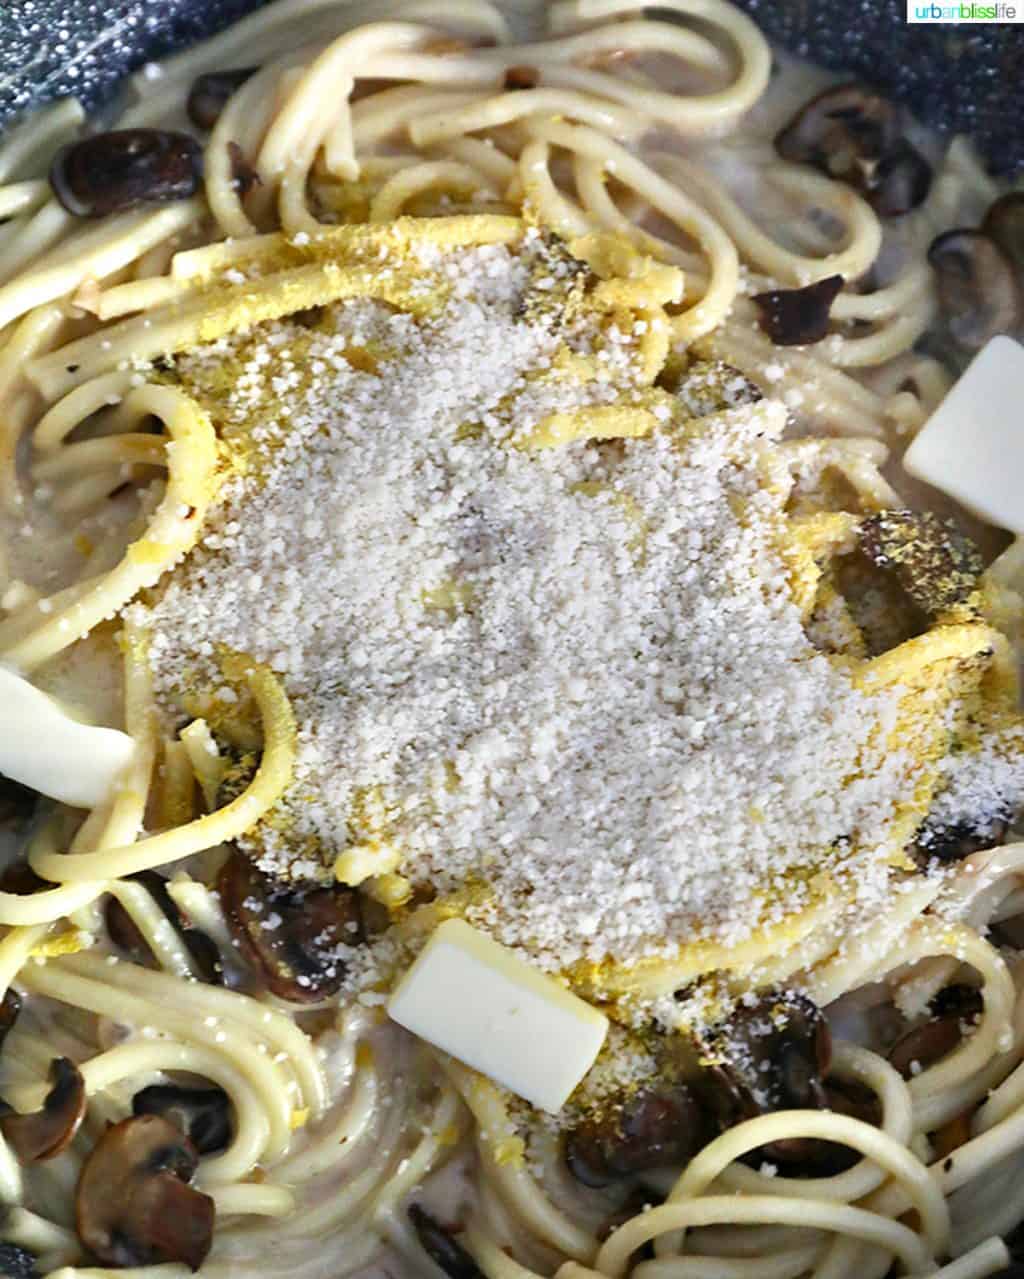 adding parmesan to pasta and mushrooms